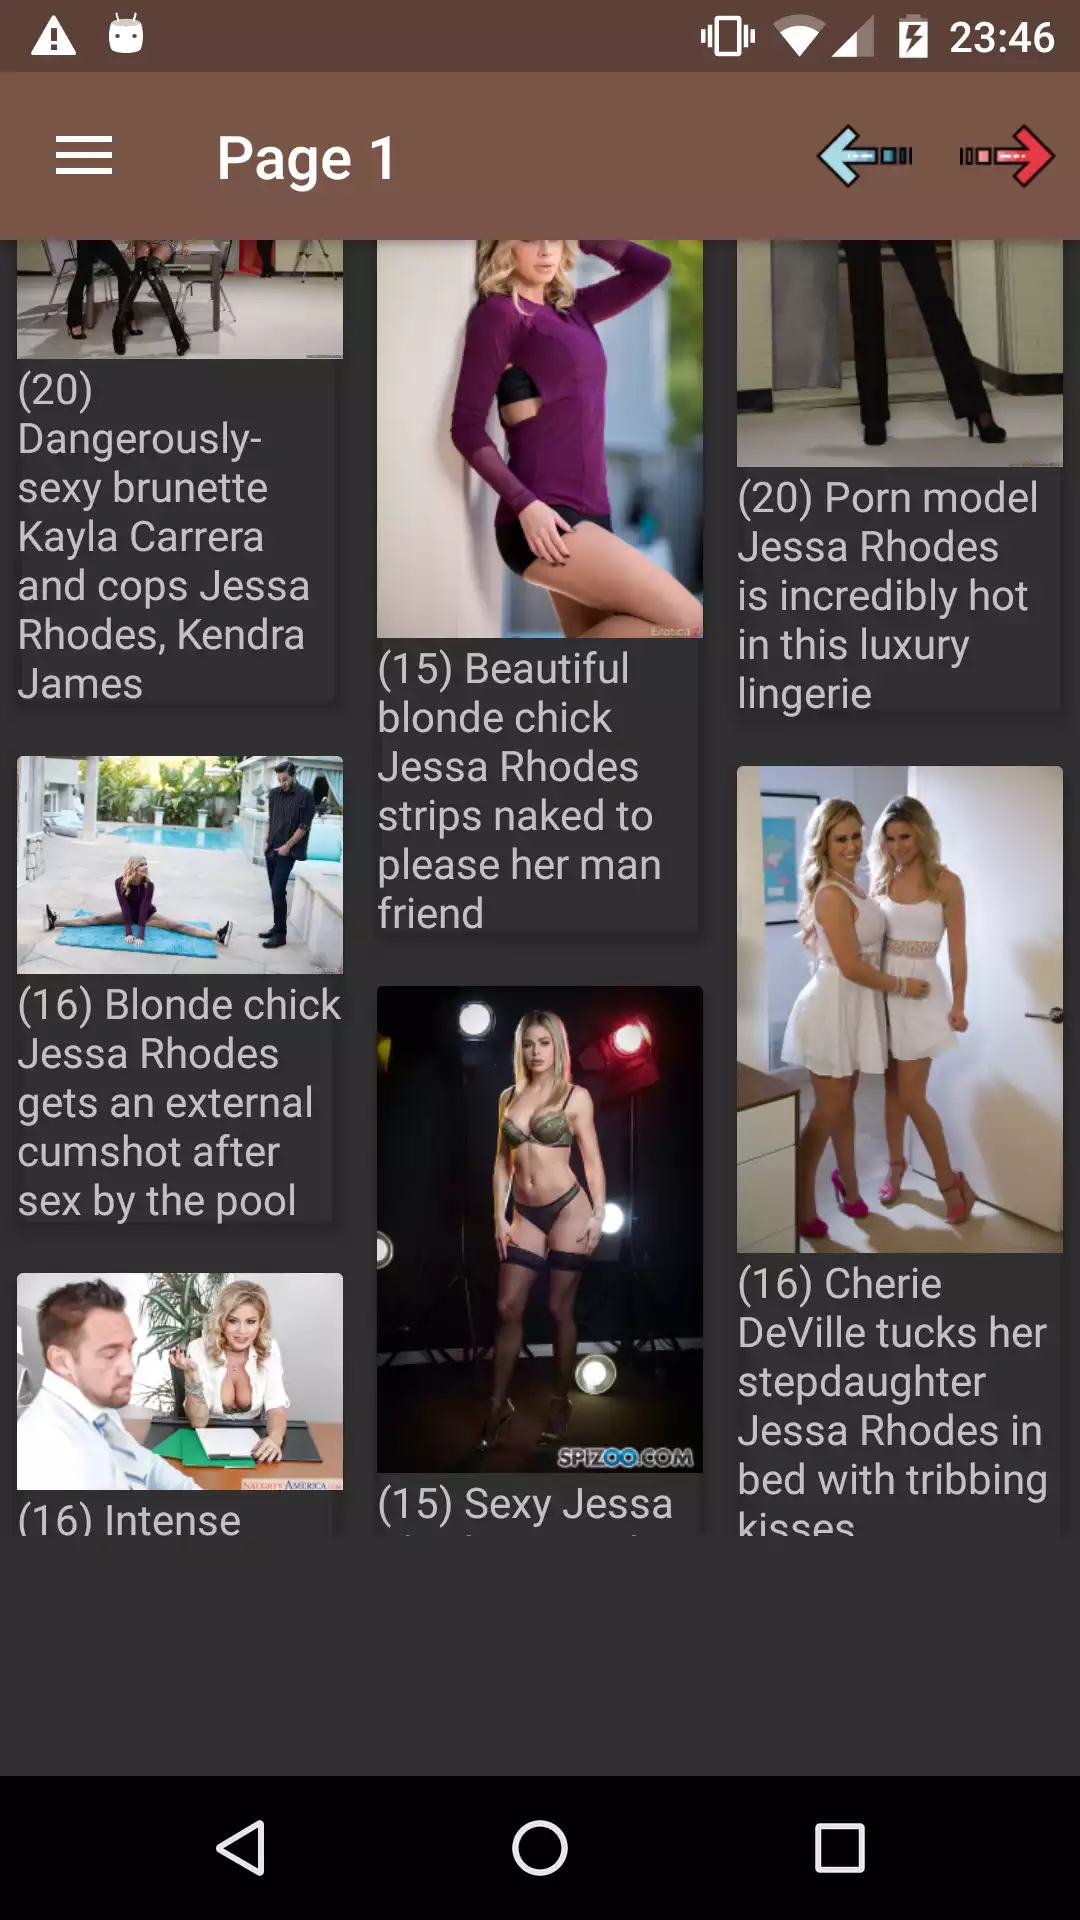 Jessa Rhodes apk,pics,wallpaper,sexy,adult,image,hintai,pornstars,hemtai,app,hot,galleries,nhentai,porn,download,latest,hentai,android,apps